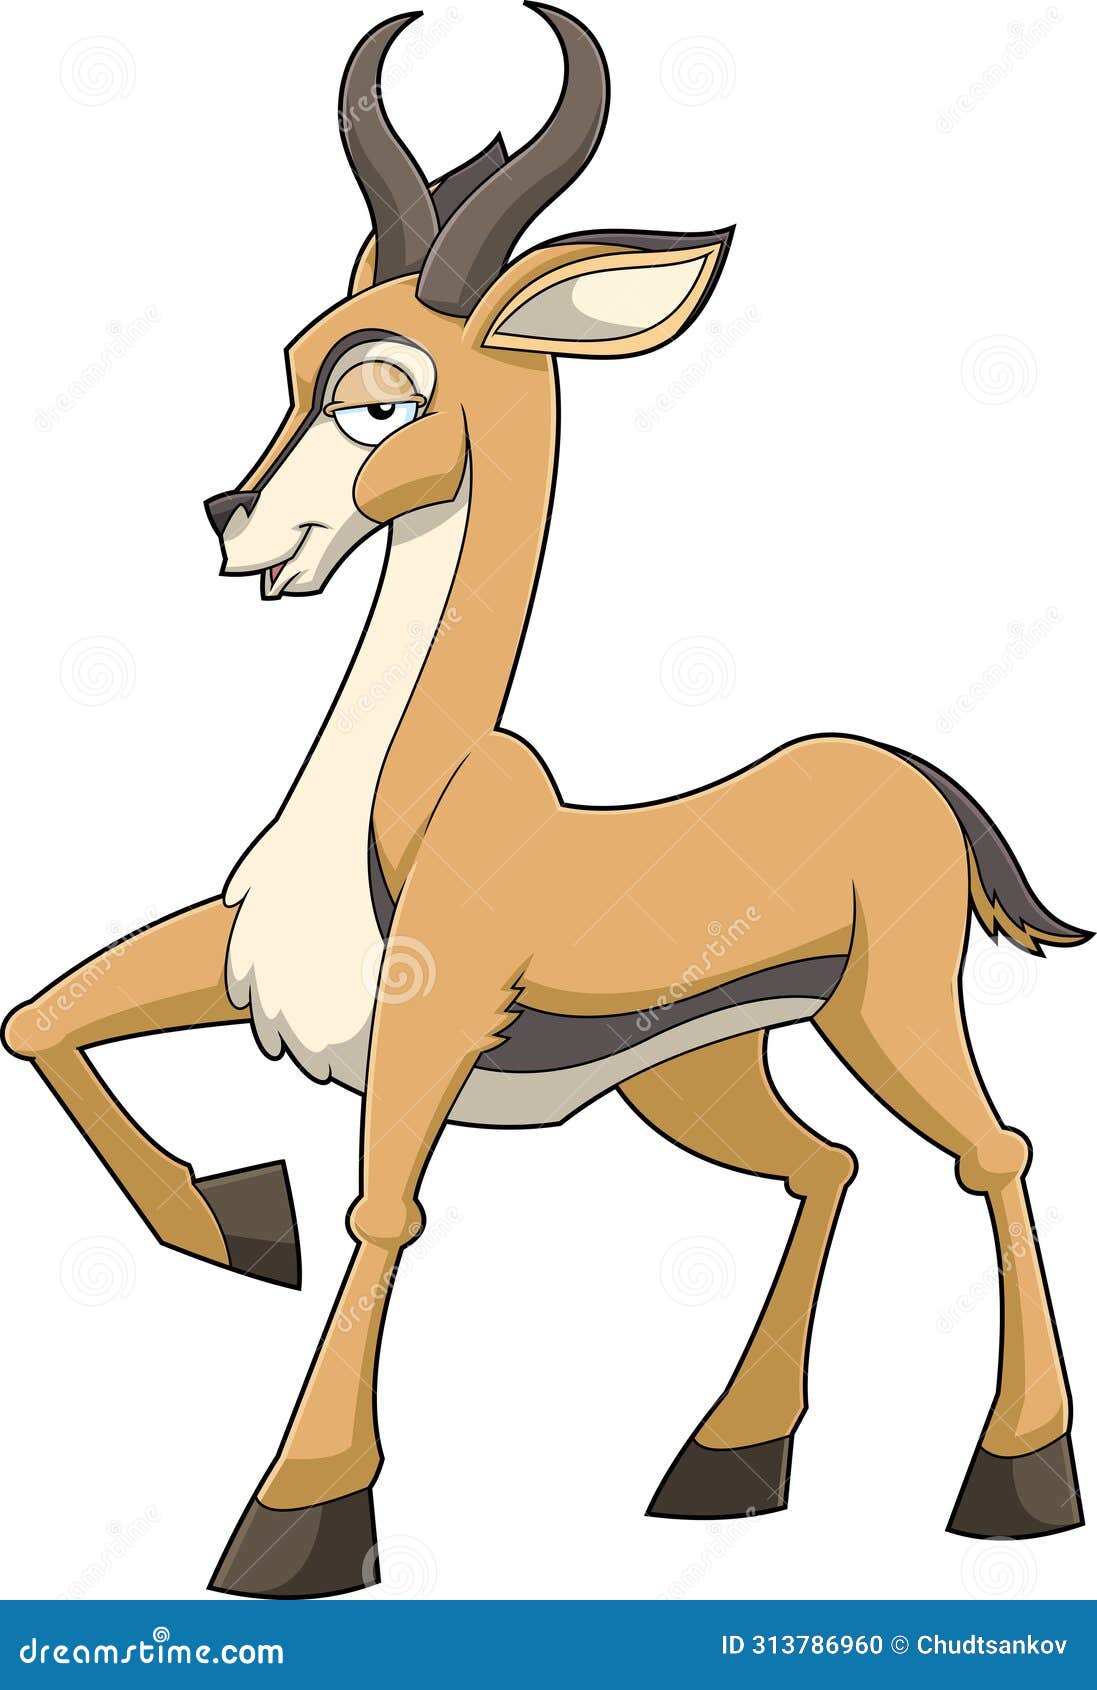 springbok animal cartoon character